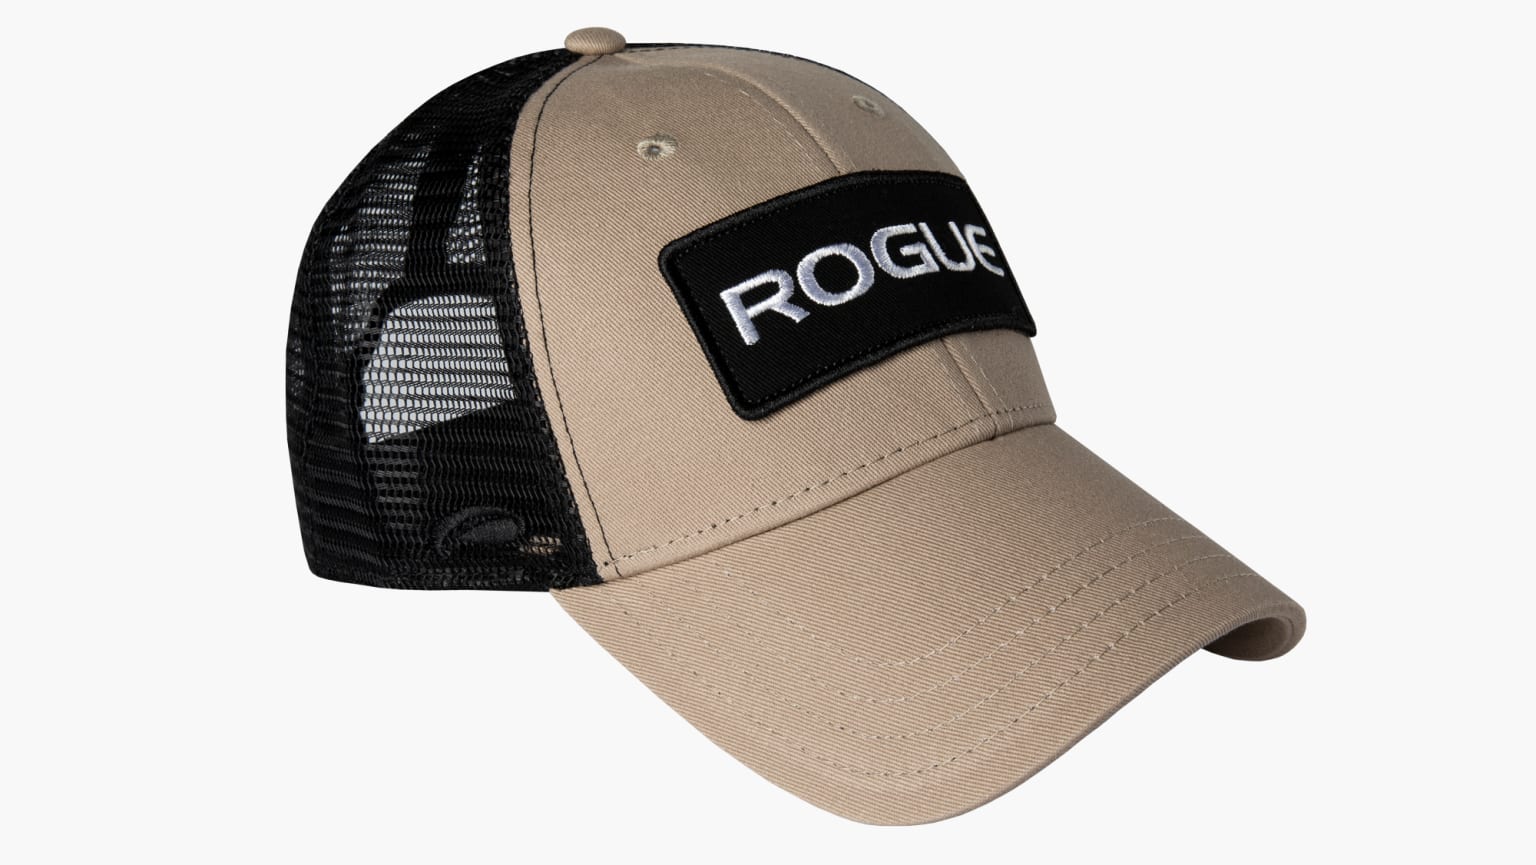 Rogue Patch Trucker Hat - Tan / Black